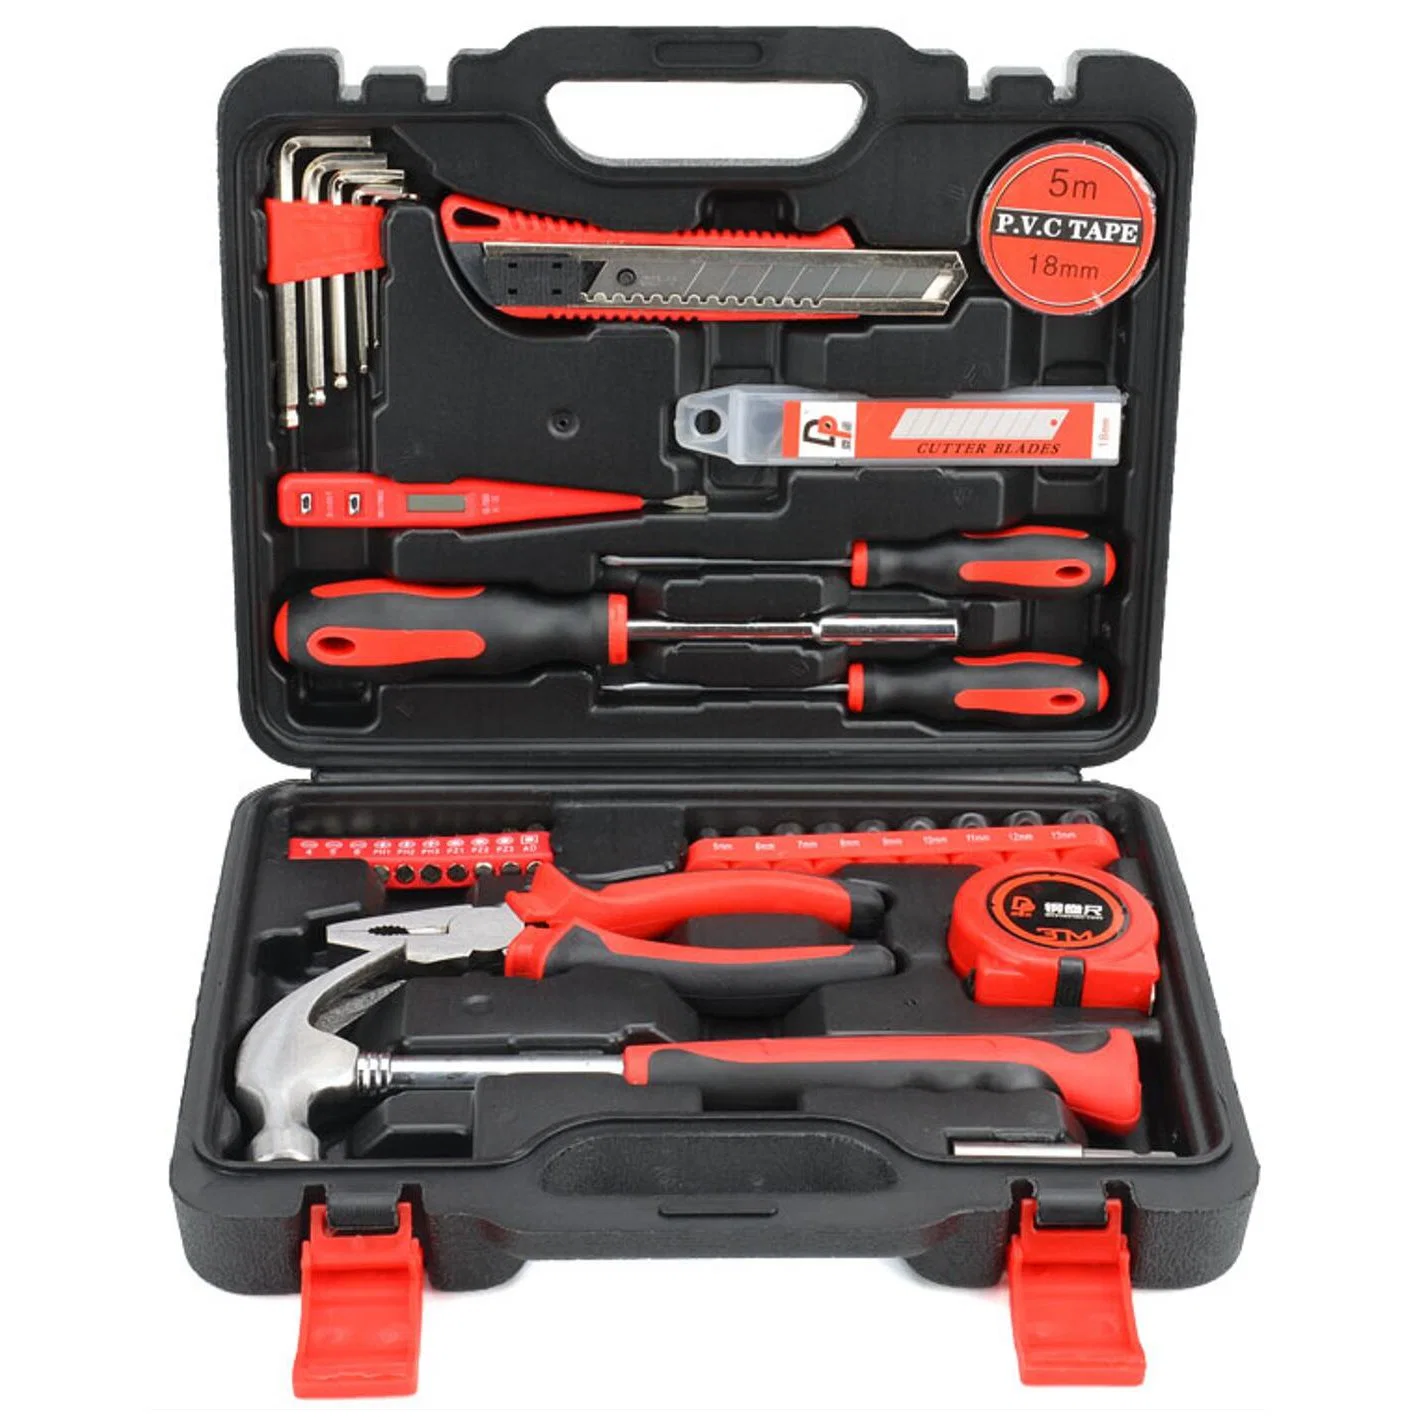 Ydp045 45PCS Hand Tools Set for Household Hardware Repair Box Set Tools Combination Tool Kit